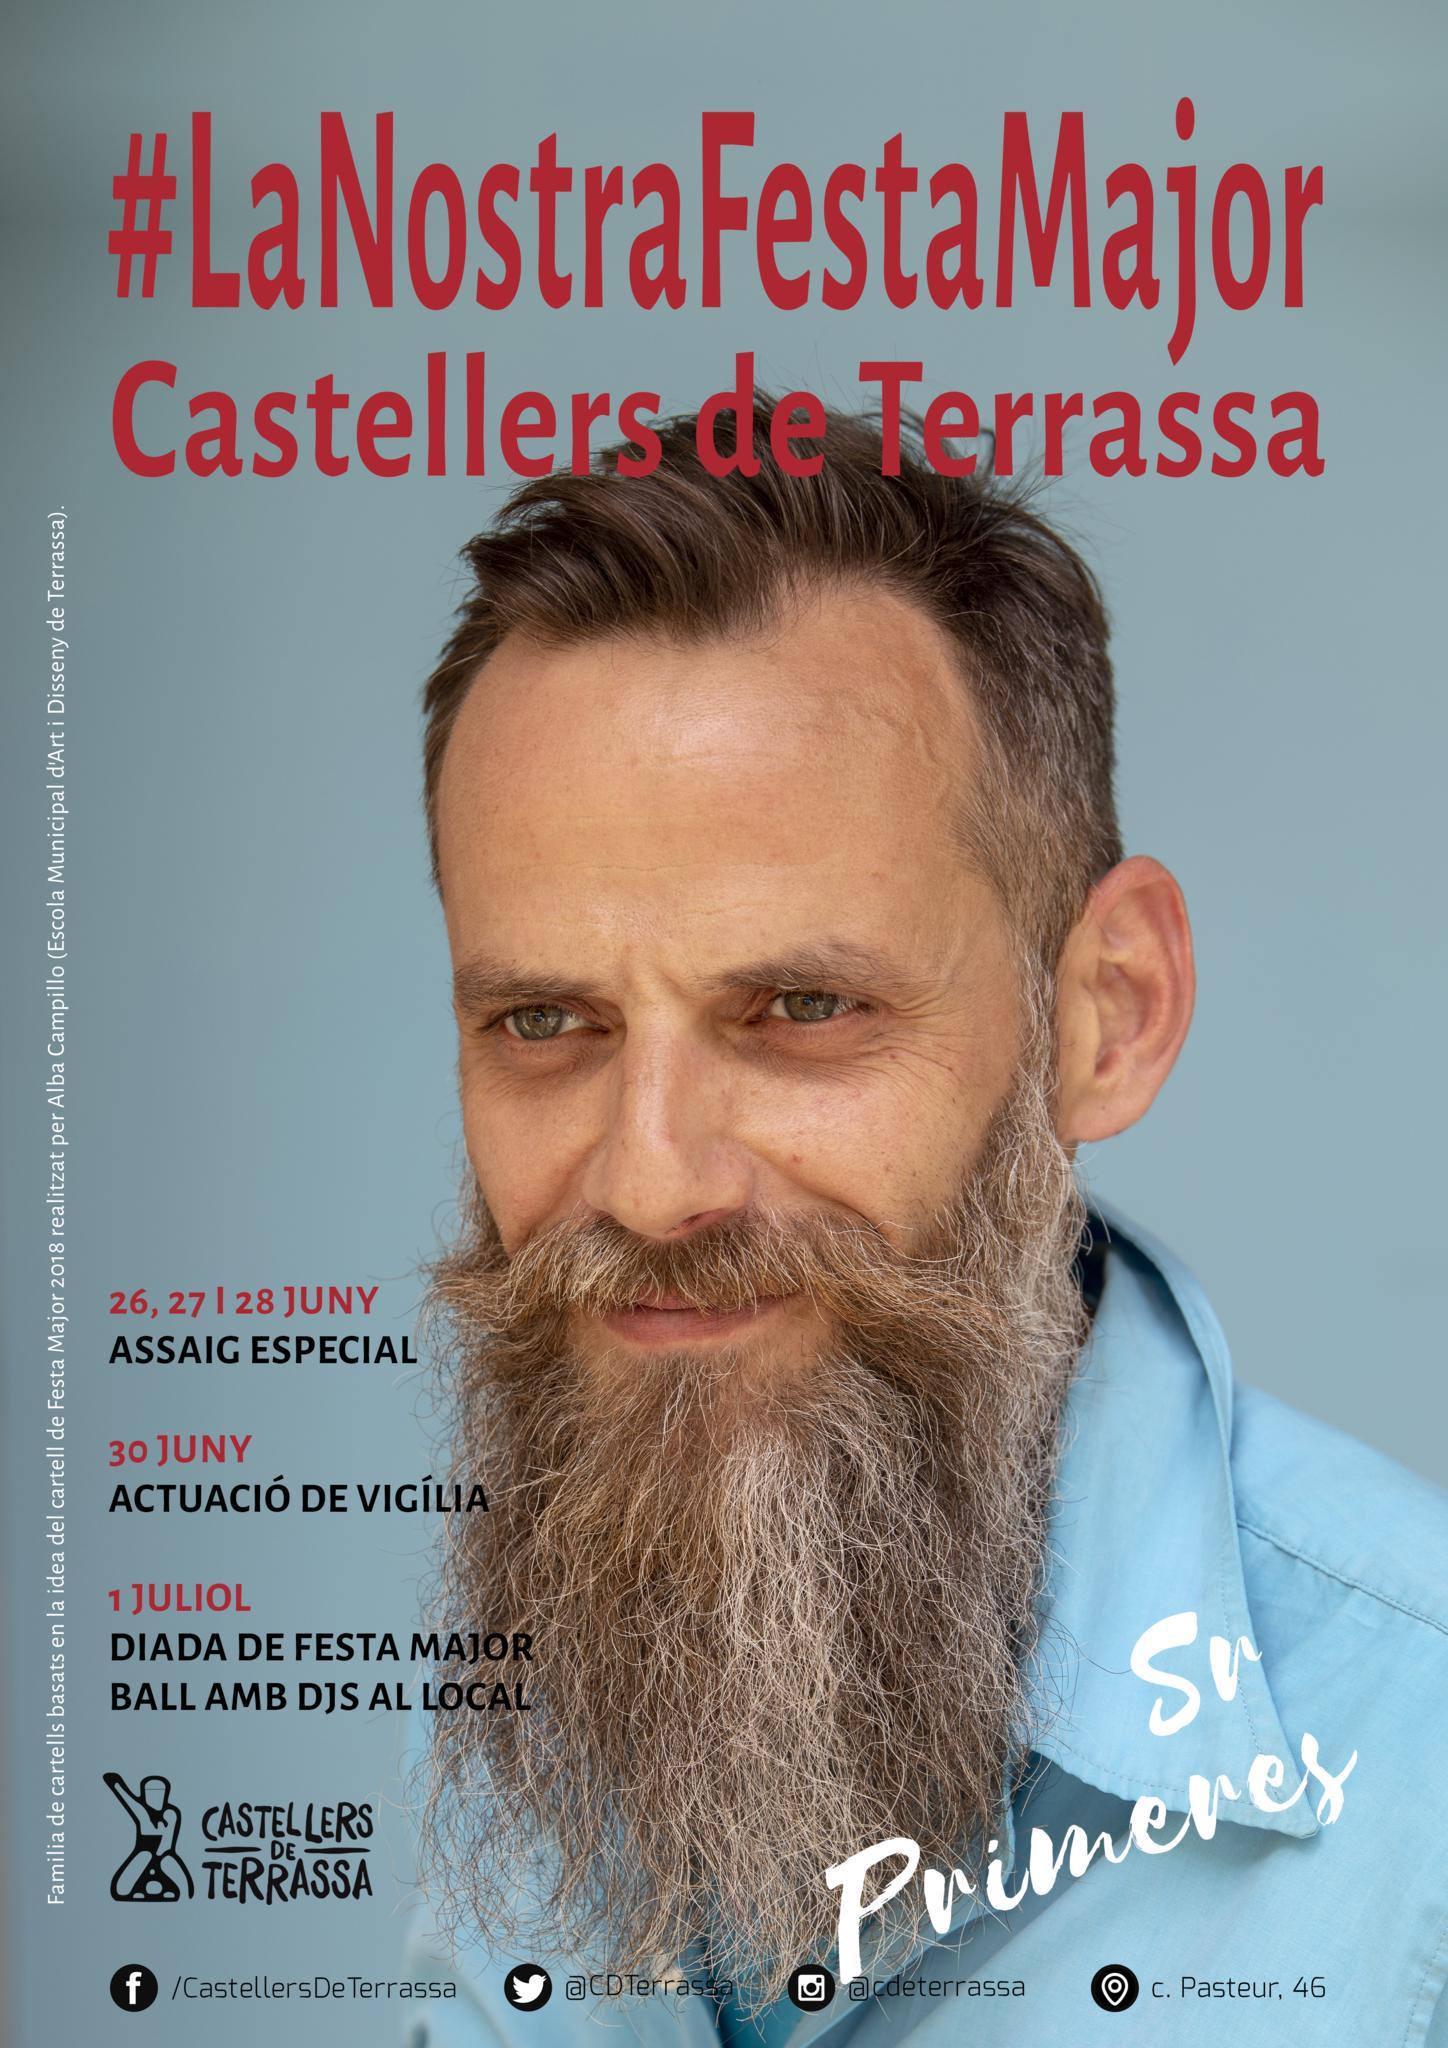 © Castellers de Terrassa 2018